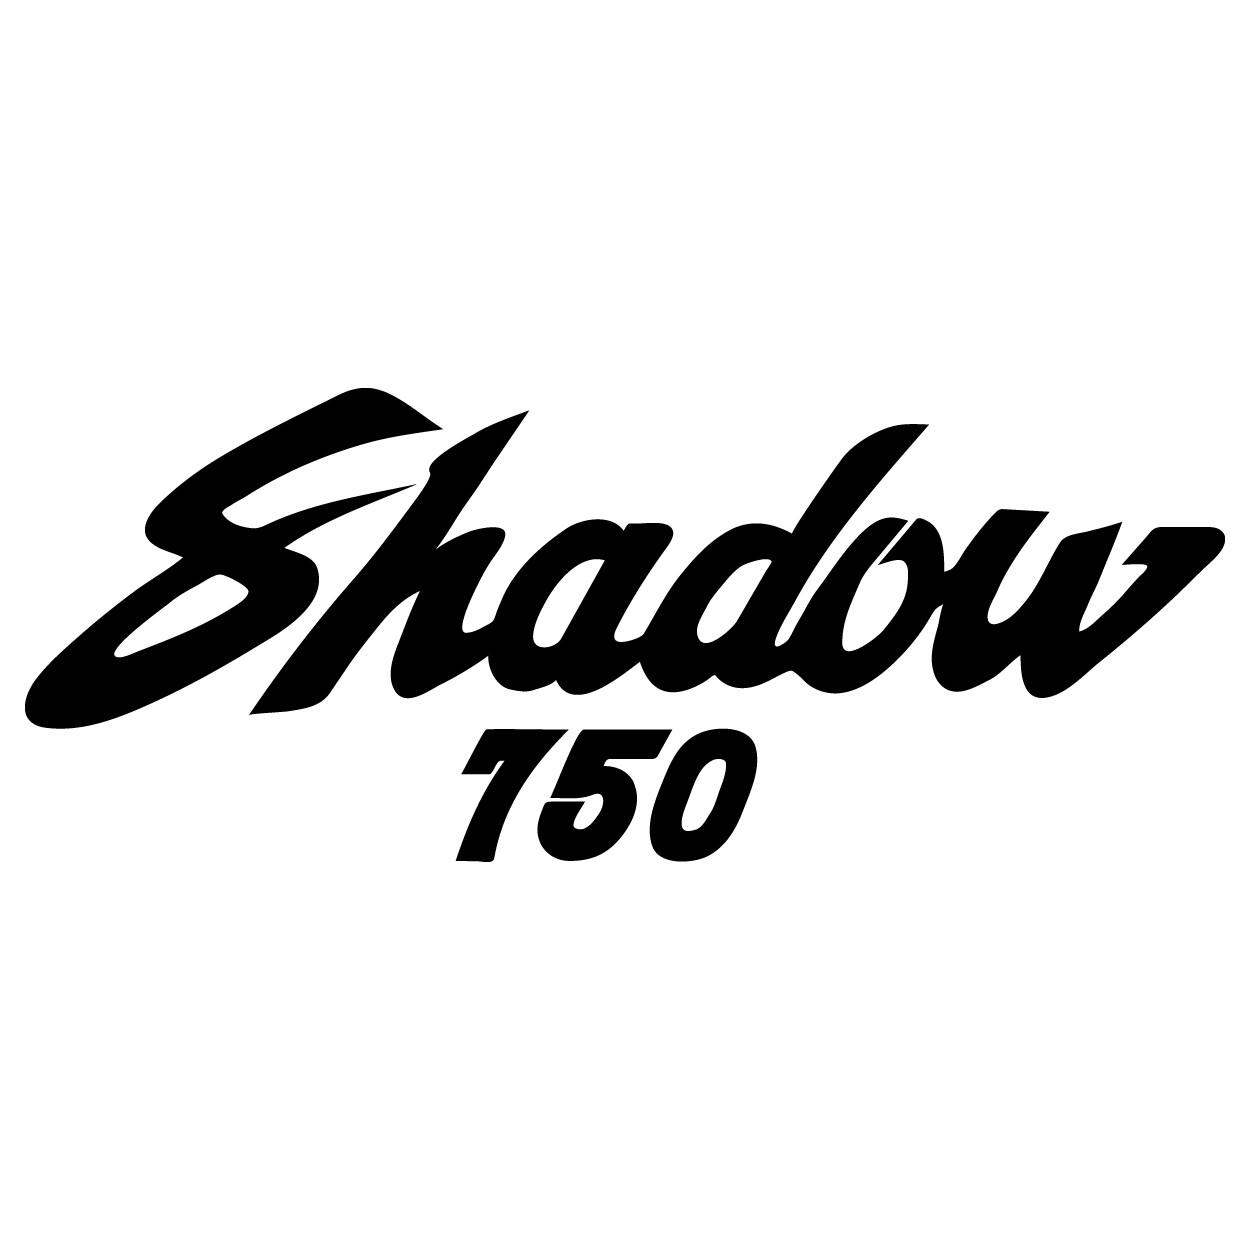 Stickers honda shadow 750 - Des prix 50% moins cher qu'en magasin